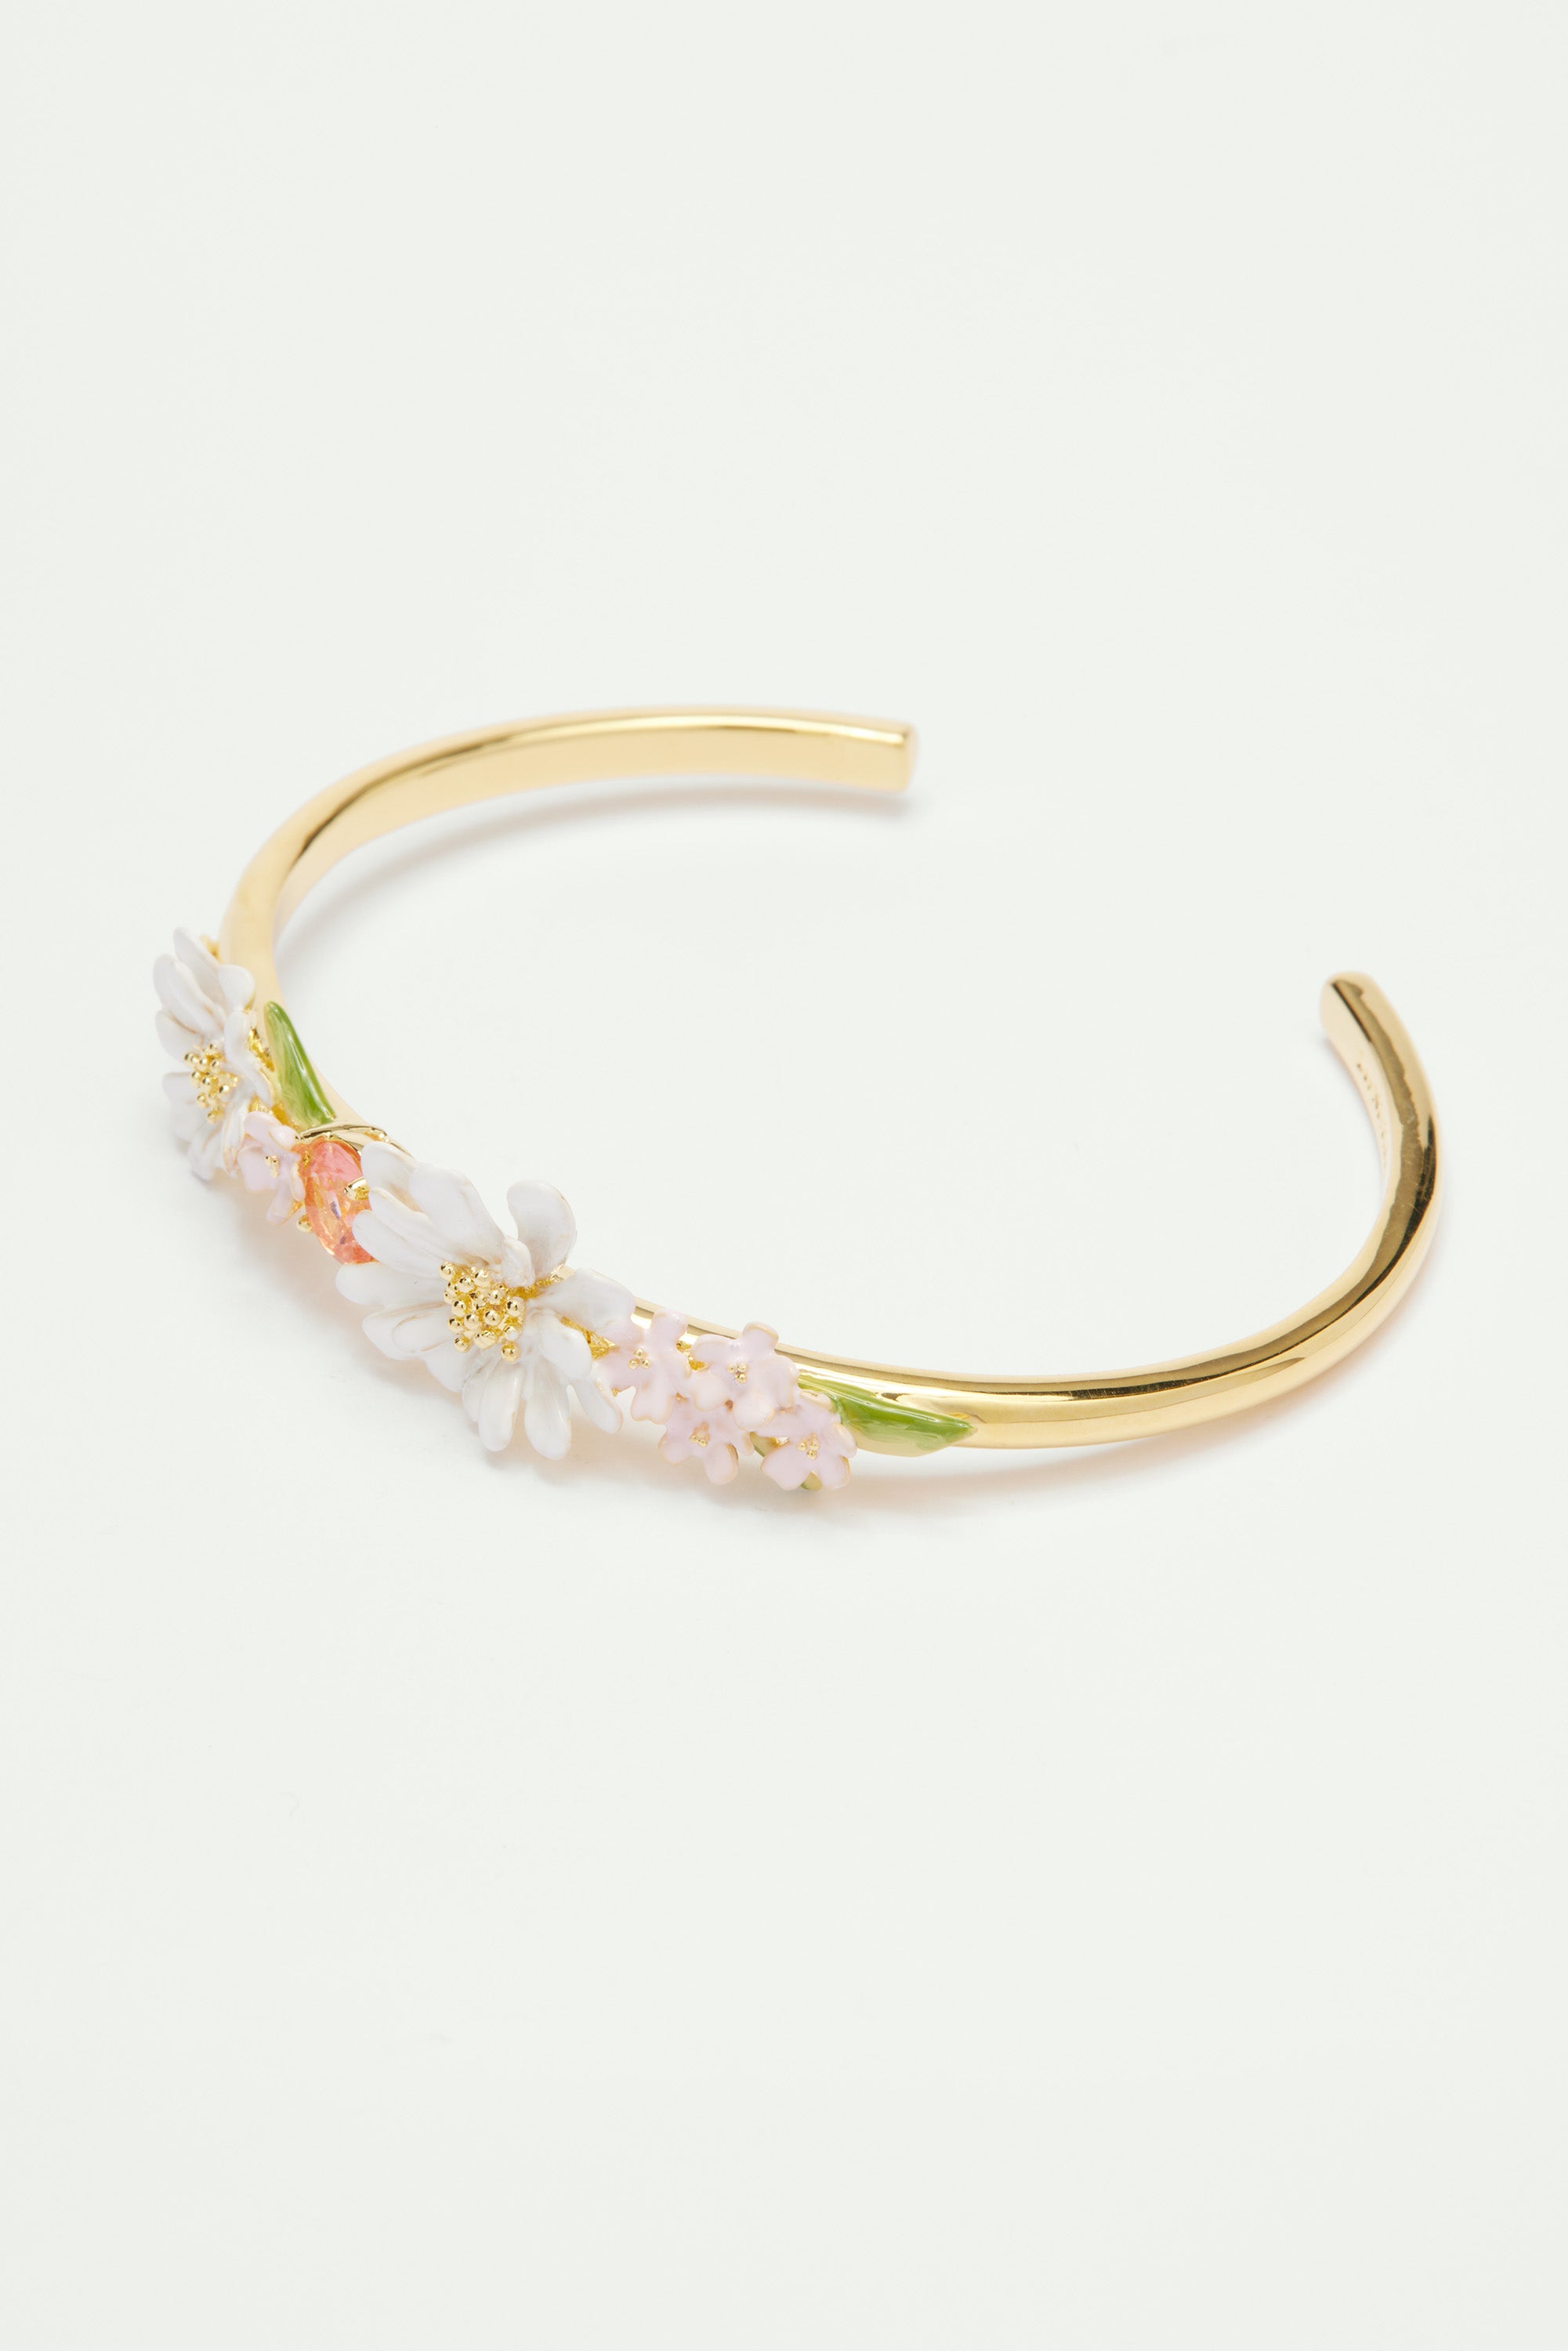 Flower bouquet and round stone bangle bracelet